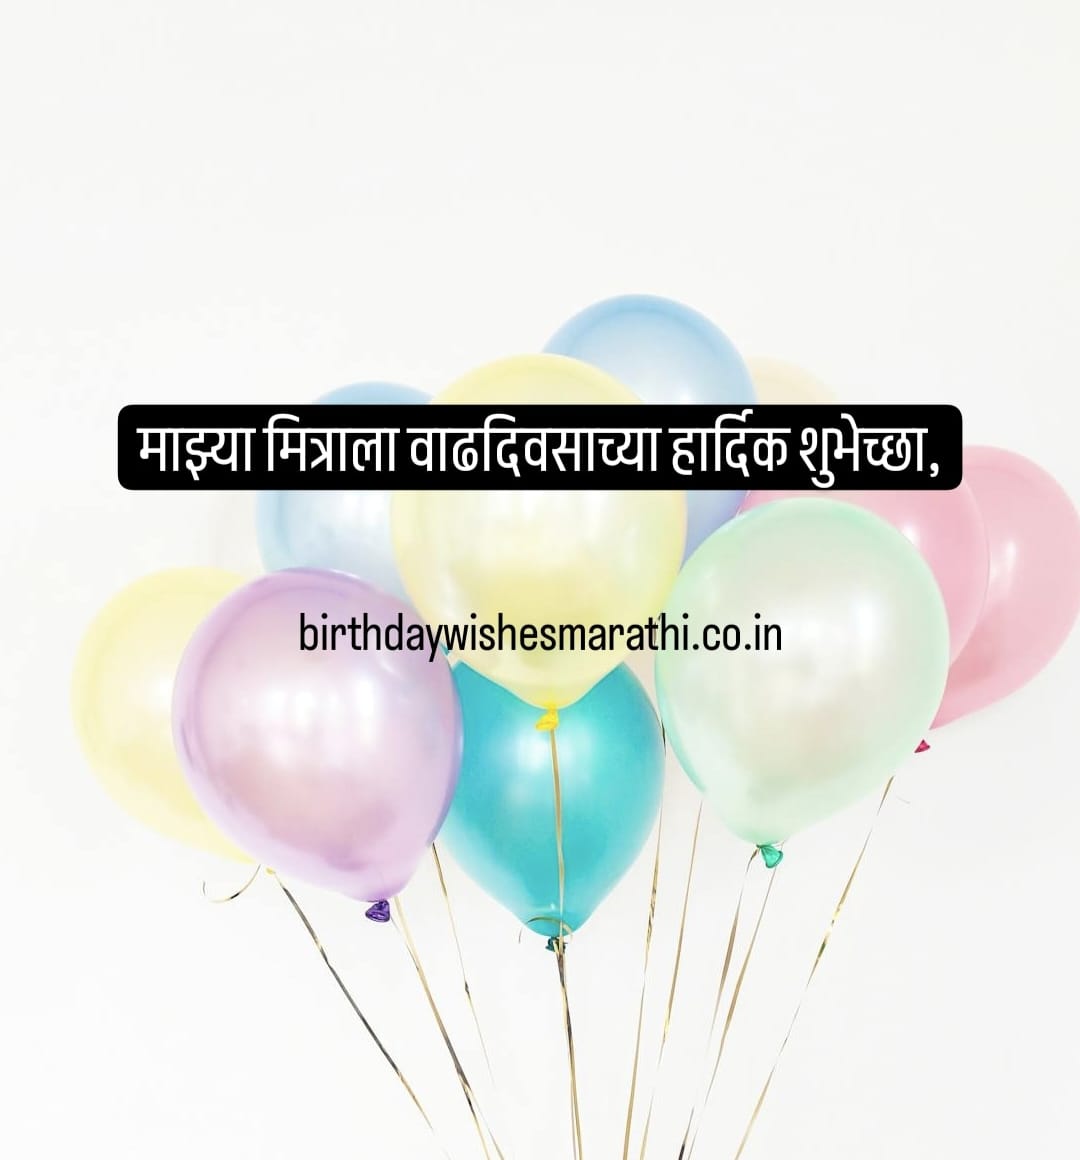 Birthday Wishes for Friend in Marathi